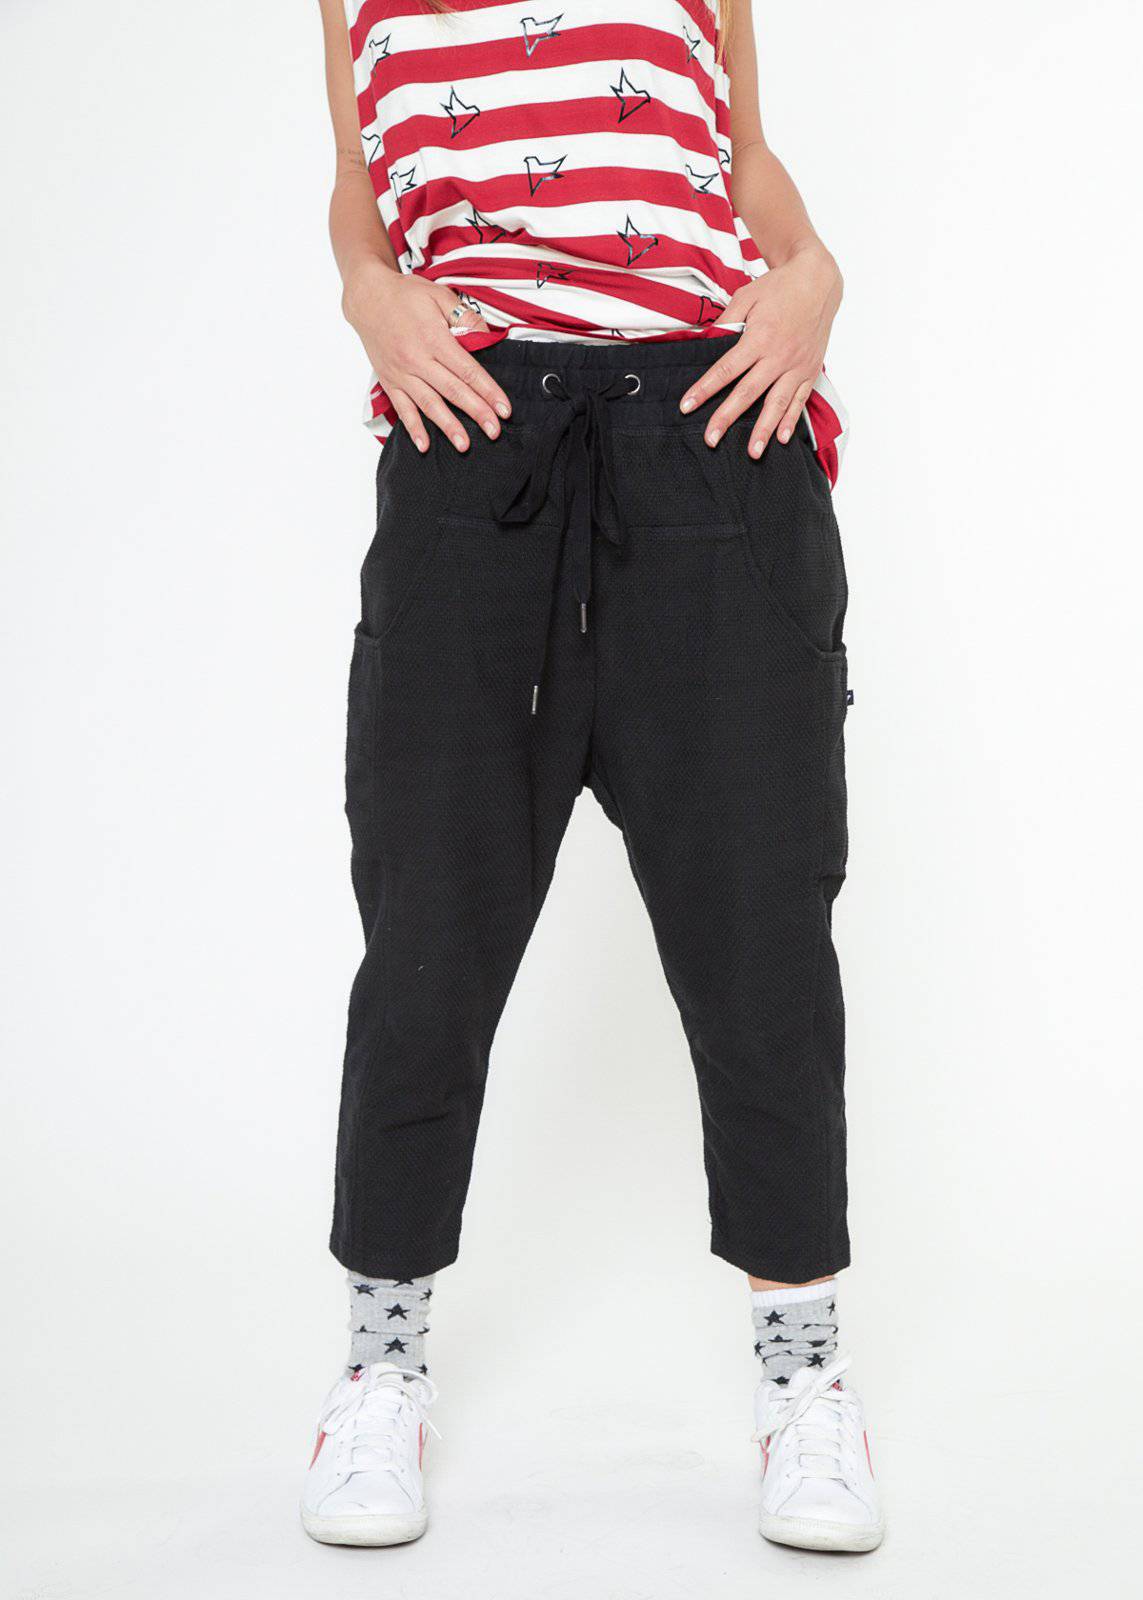 Konus Men's Cropped Pants With Side Panels in Black by Shop at Konus